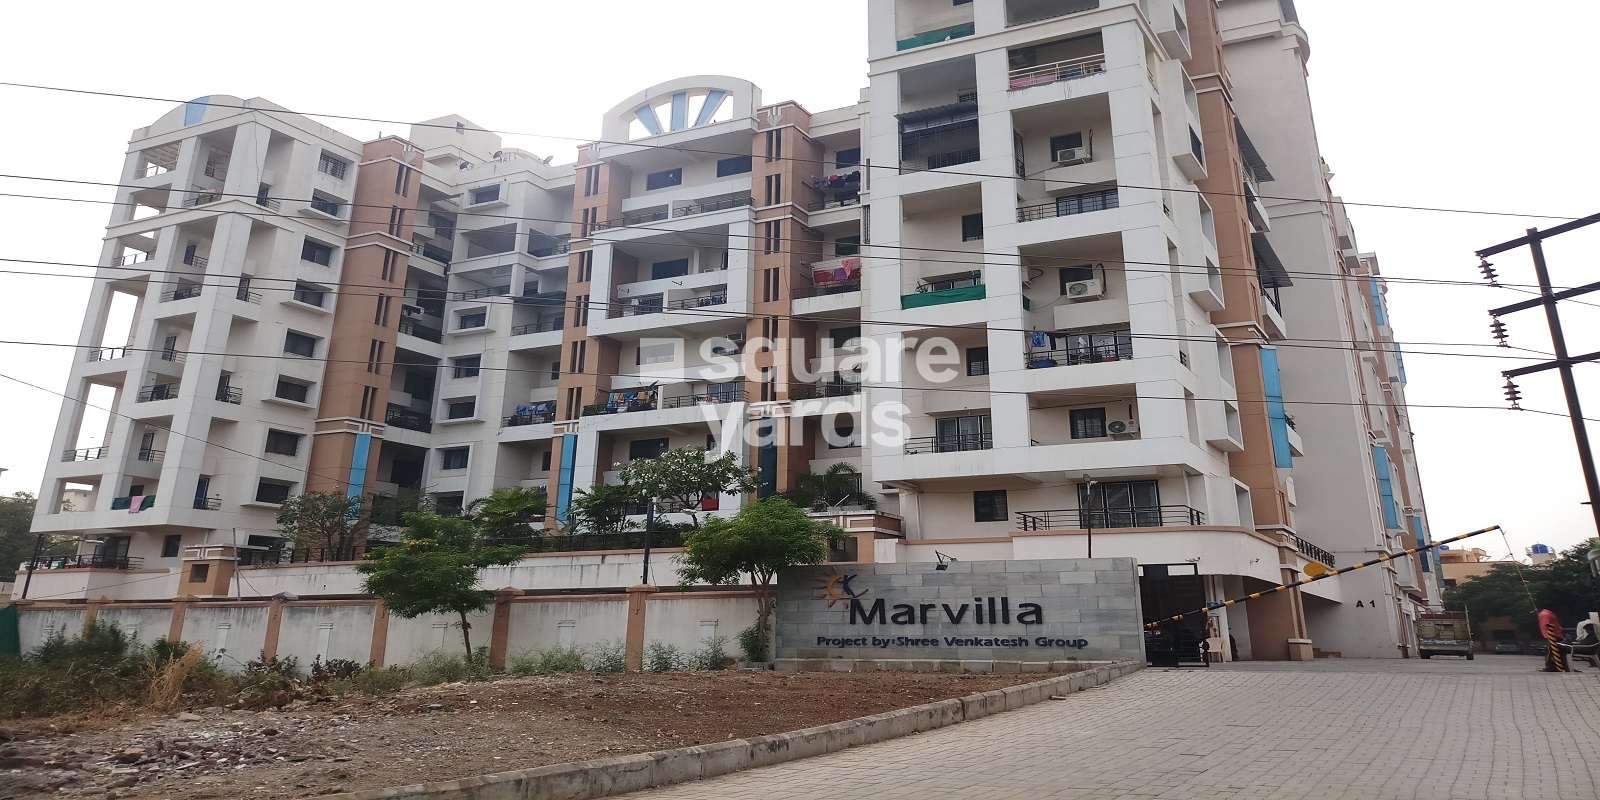 Shree Venkatesh Marvilla Apartment Cover Image